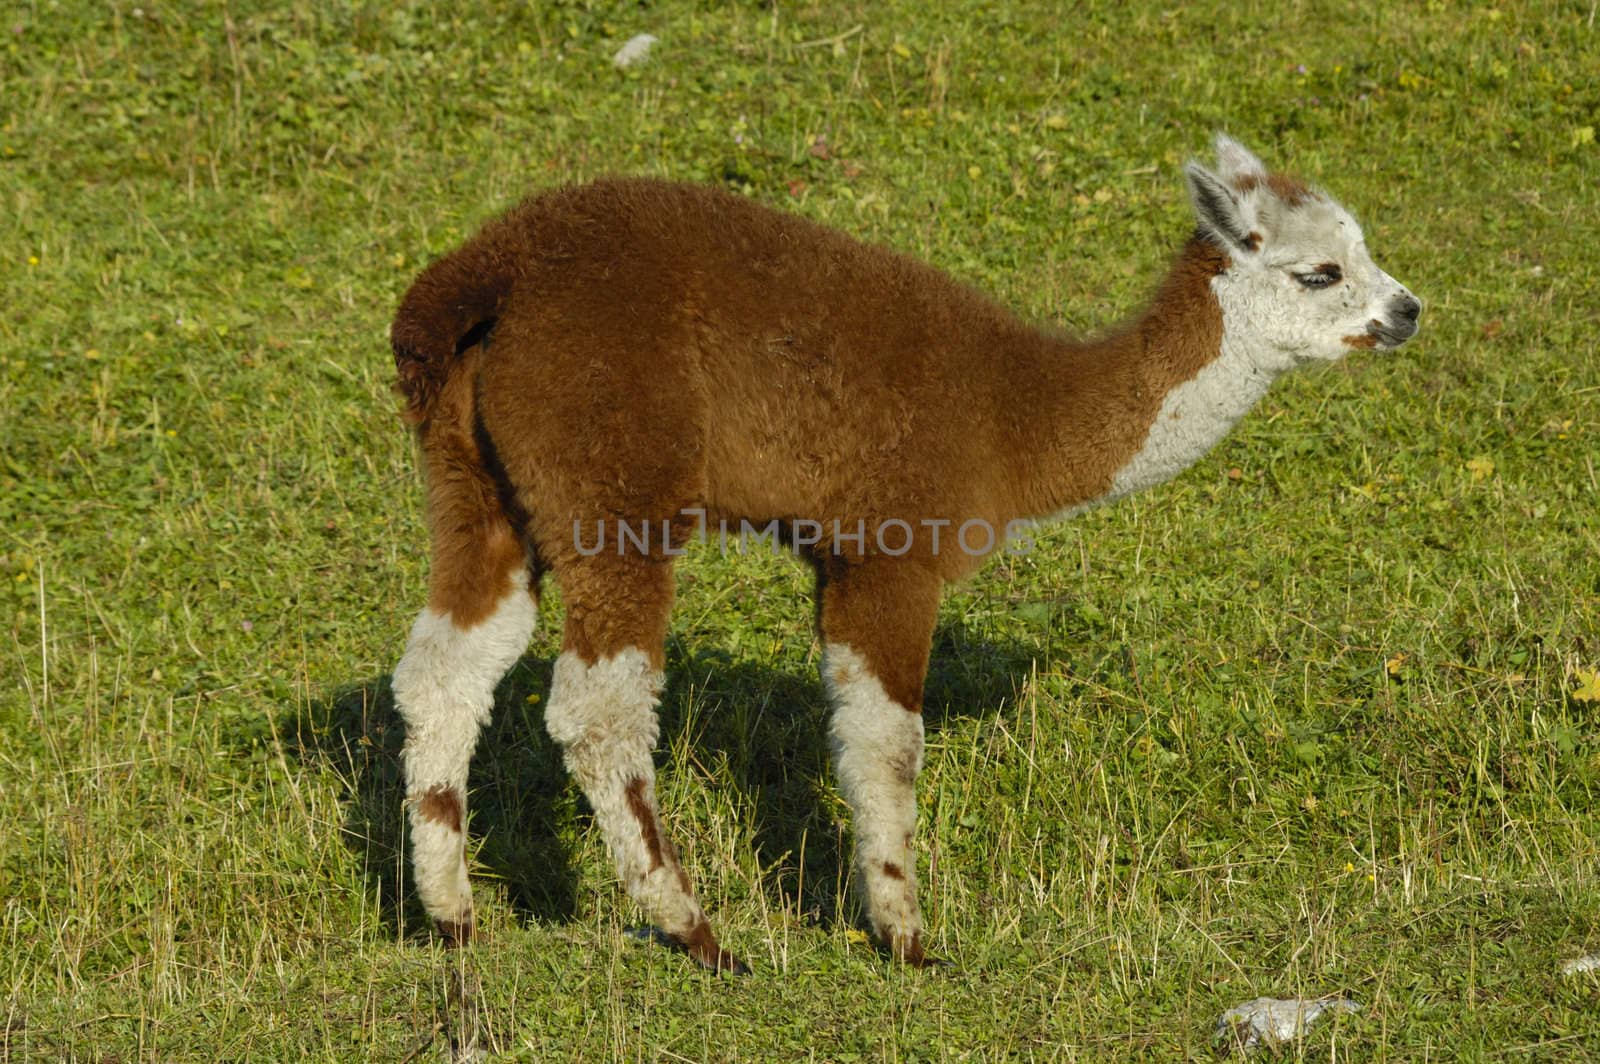 A cute little cria (the correct name for a baby llama).